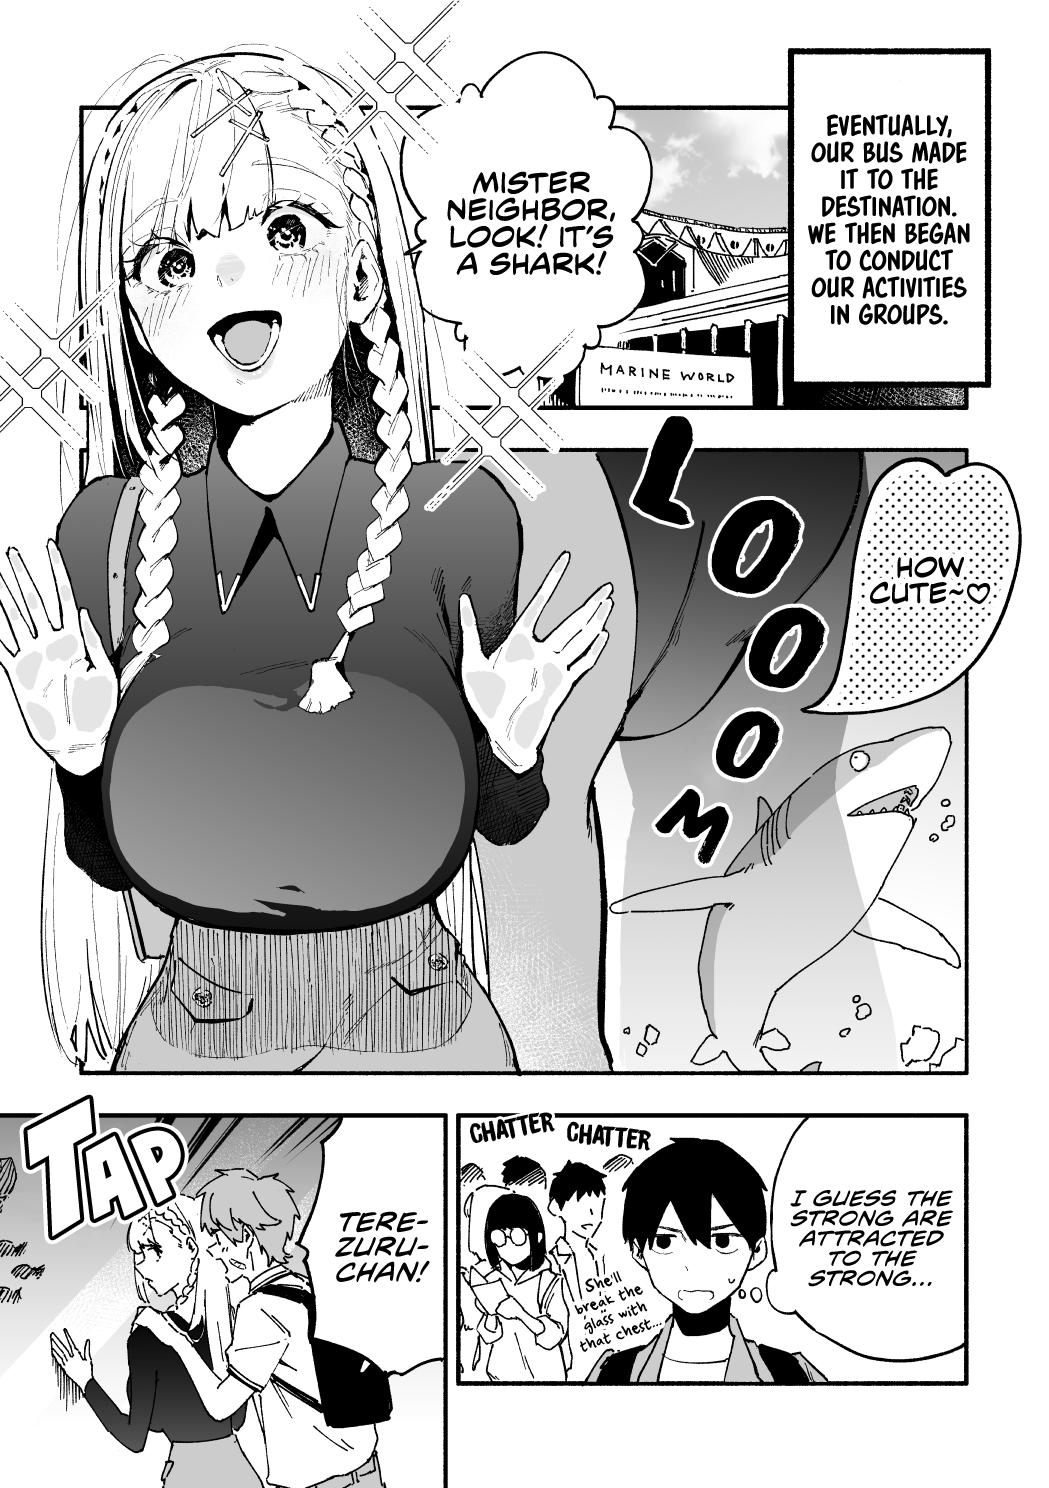 Read The Angelic Yet Devilish Transfer Student With Big Tits Chapter 11 on  Mangakakalot